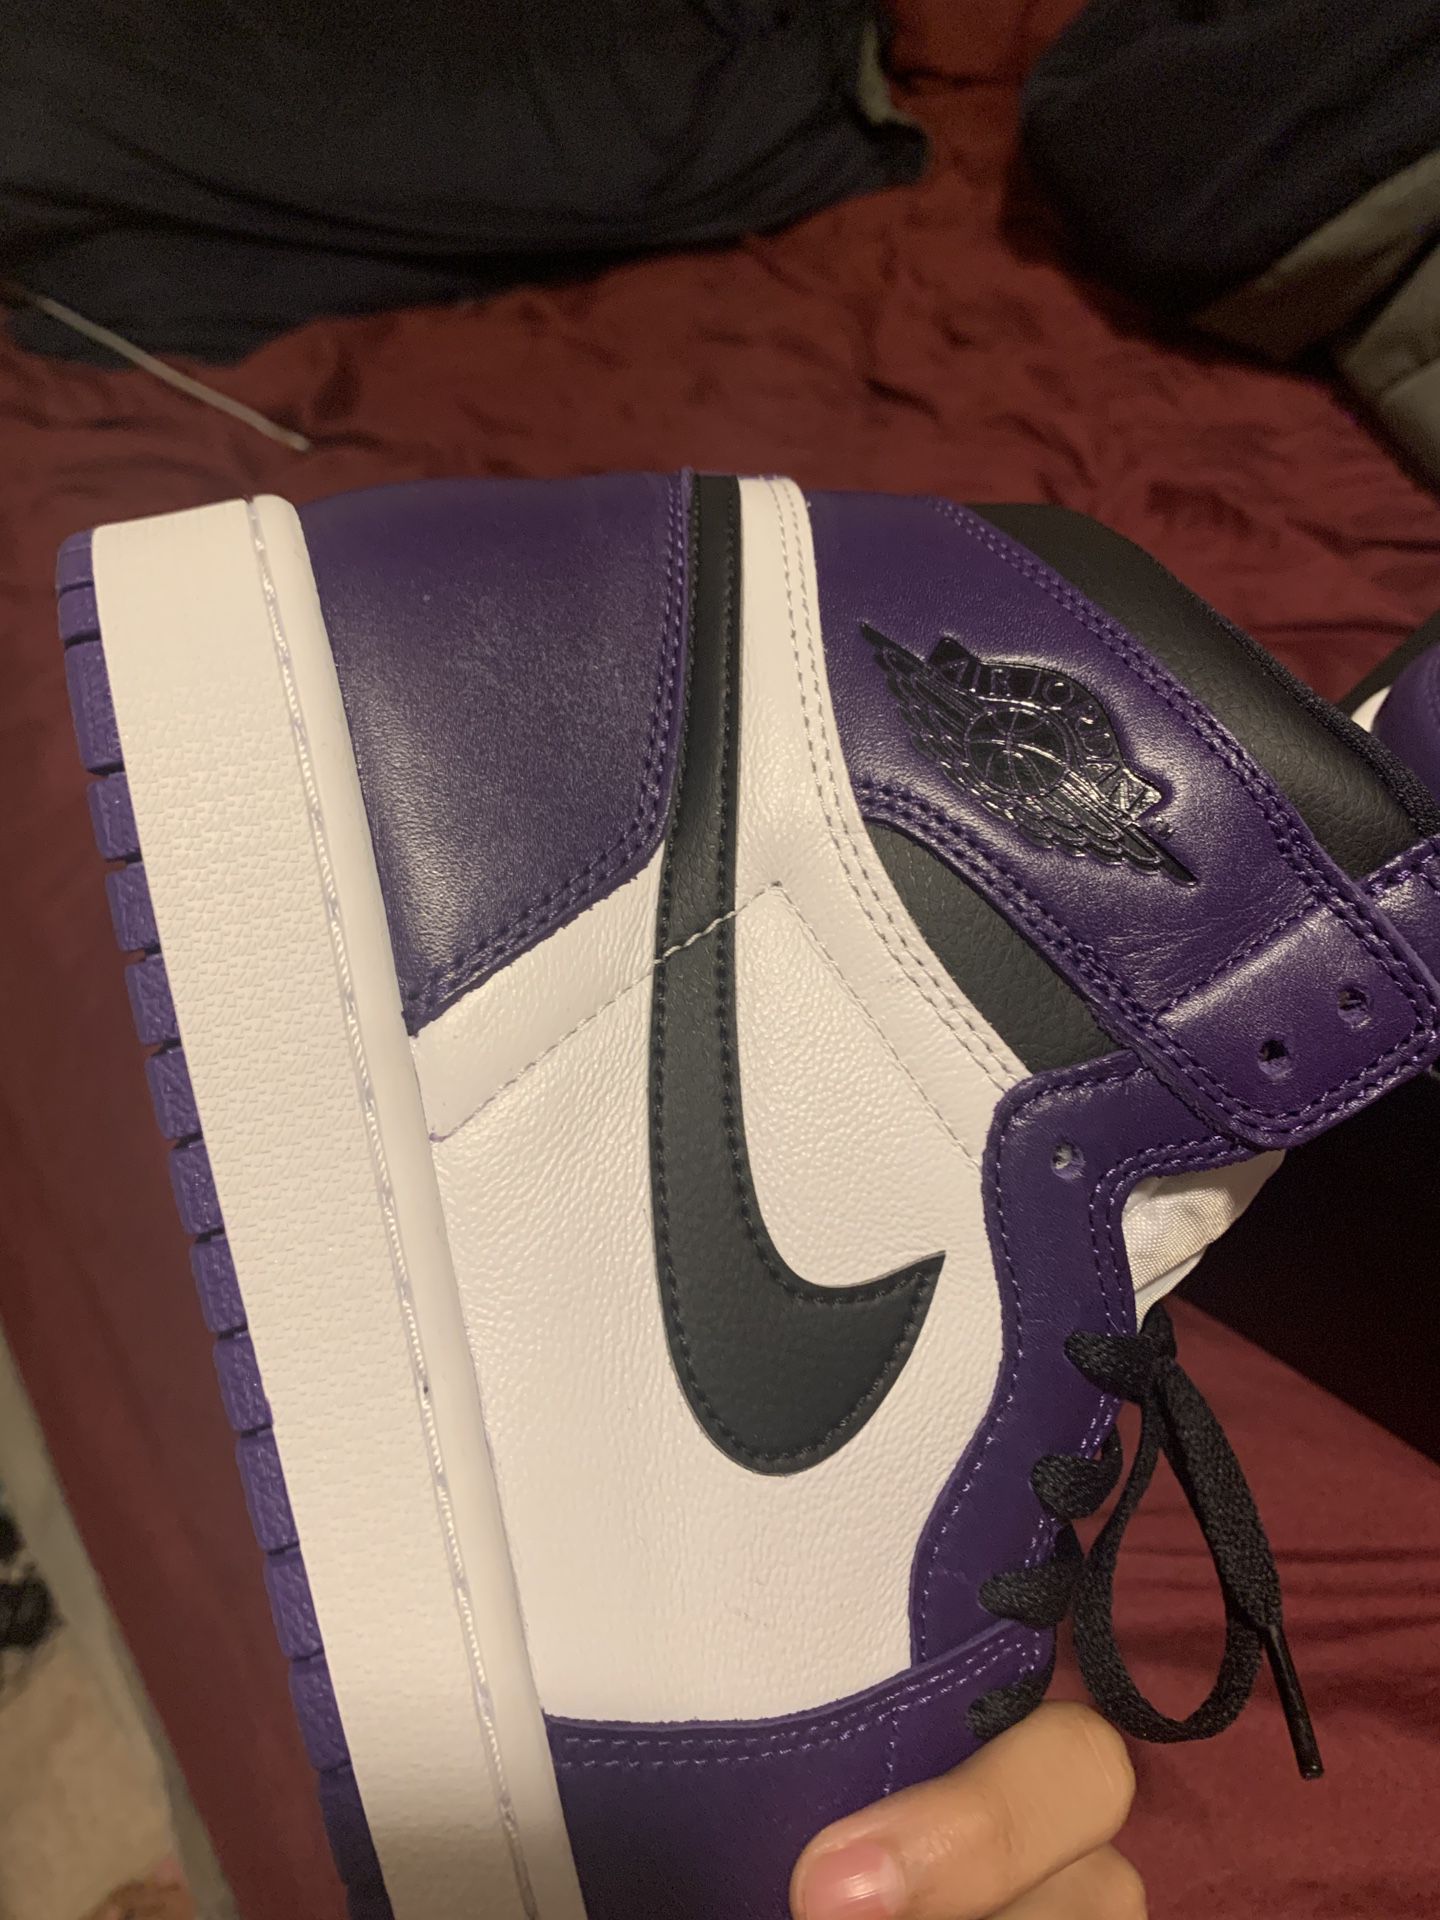 Jordan 1 court purples